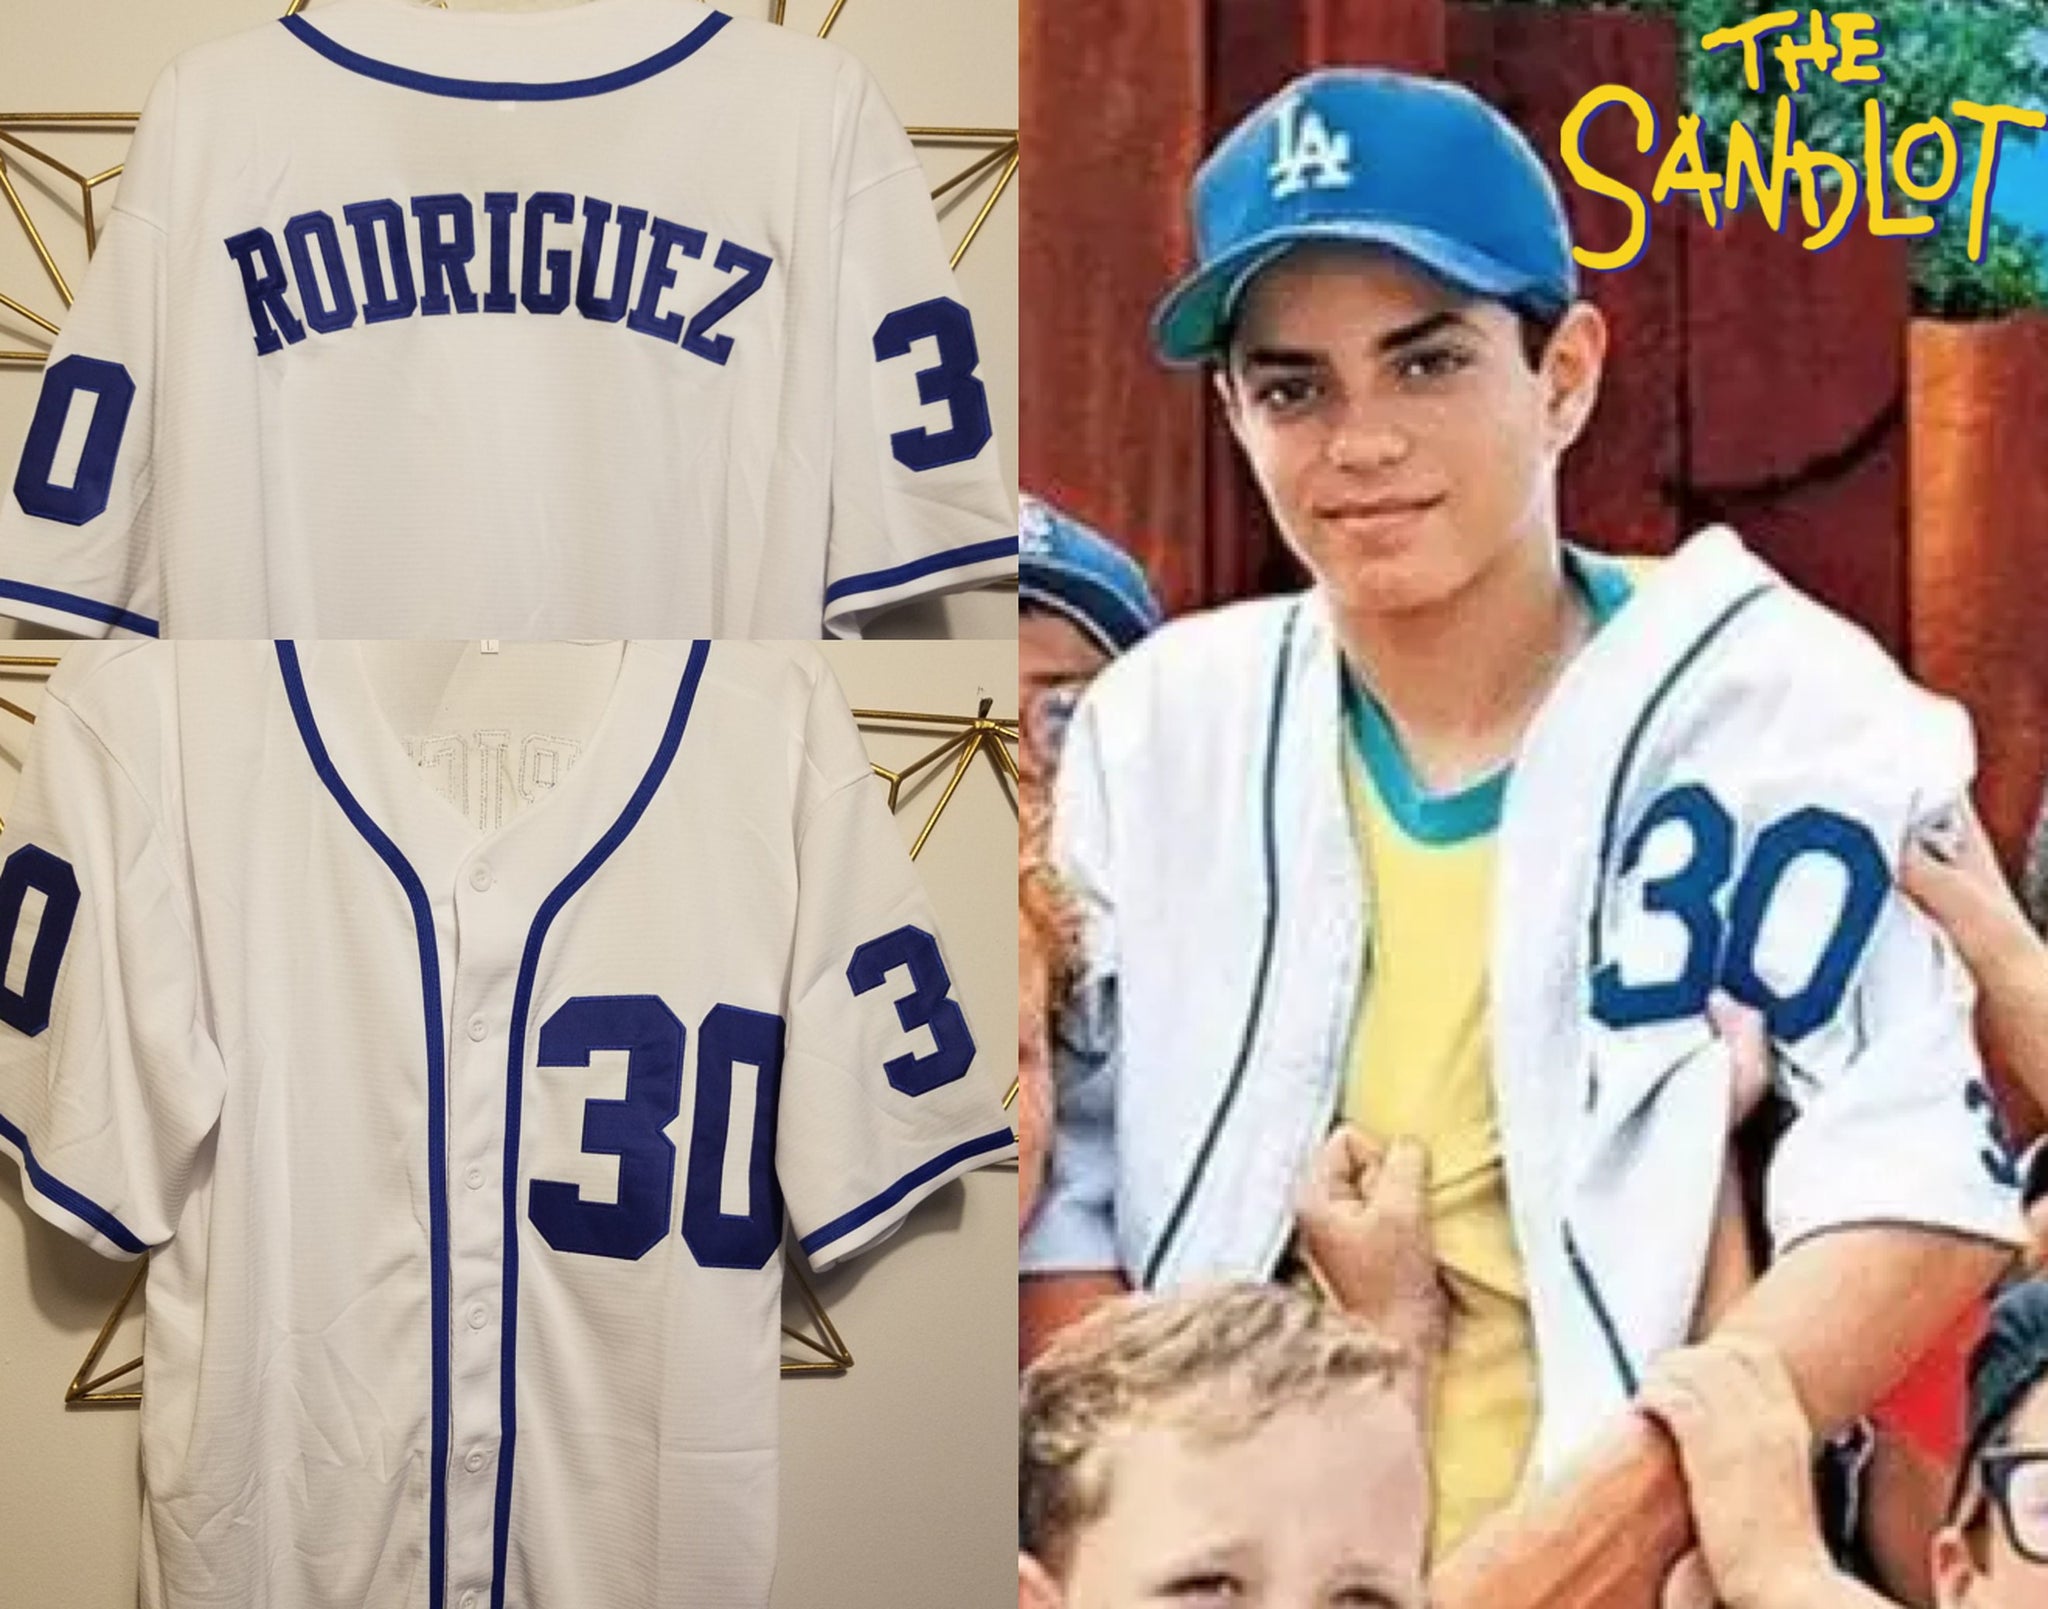 luqiaomaoyi Men's #30 Sandlot Benny The Jet Rodriguez Movie Baseball Jersey Stitched Christmas Summer S-3xl